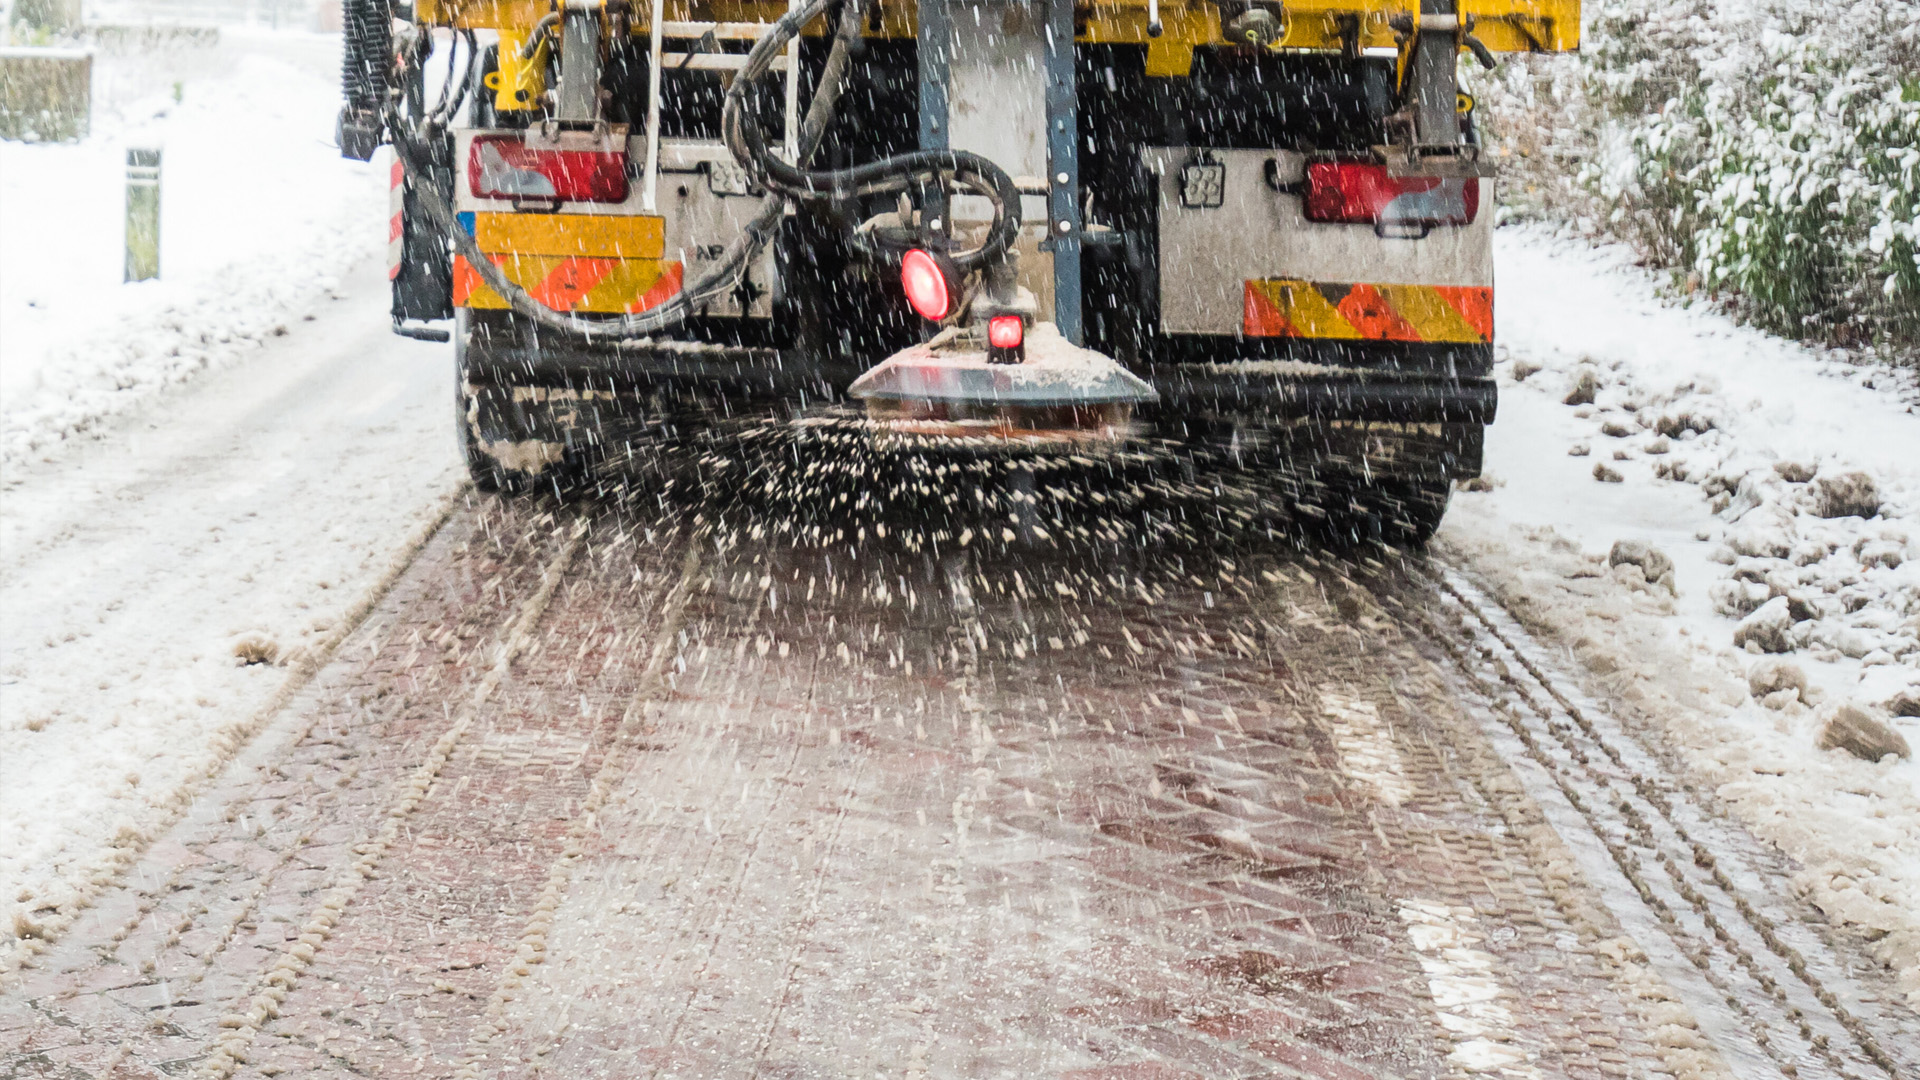 The rear end of a salt truck dispensing salt on a snowy road.